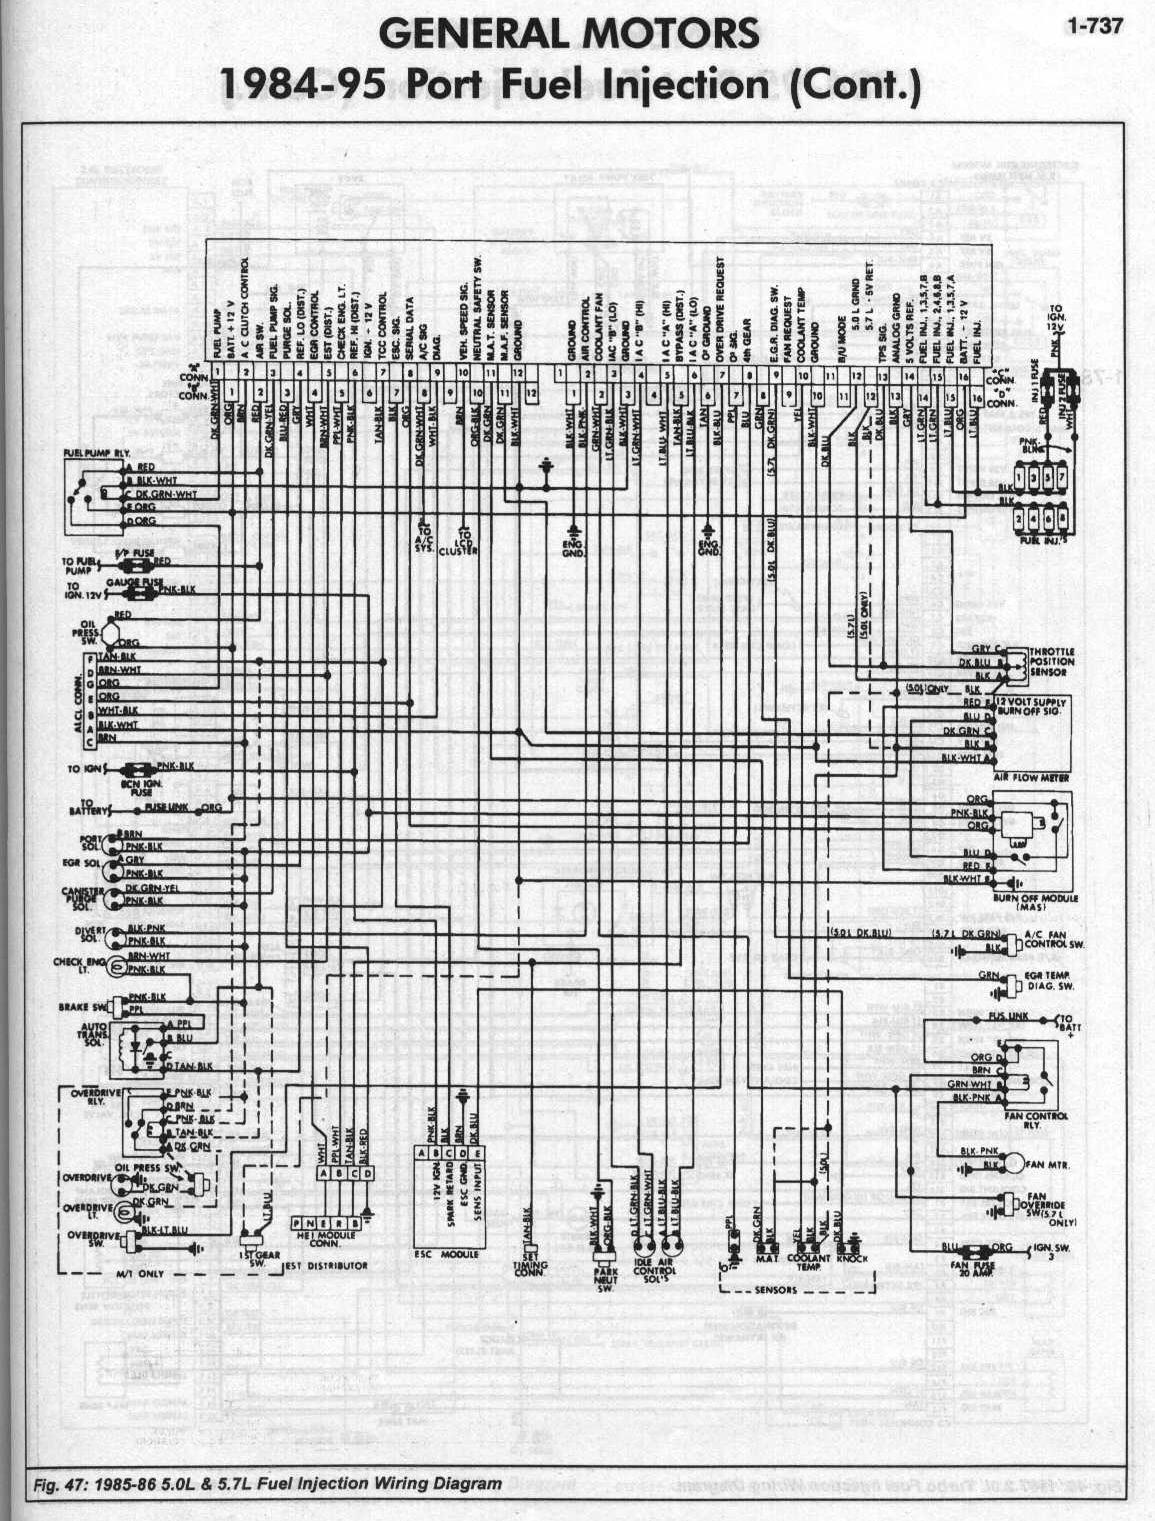 My 85 Z28 and EPROM Project hyundai ecu wiring diagram 